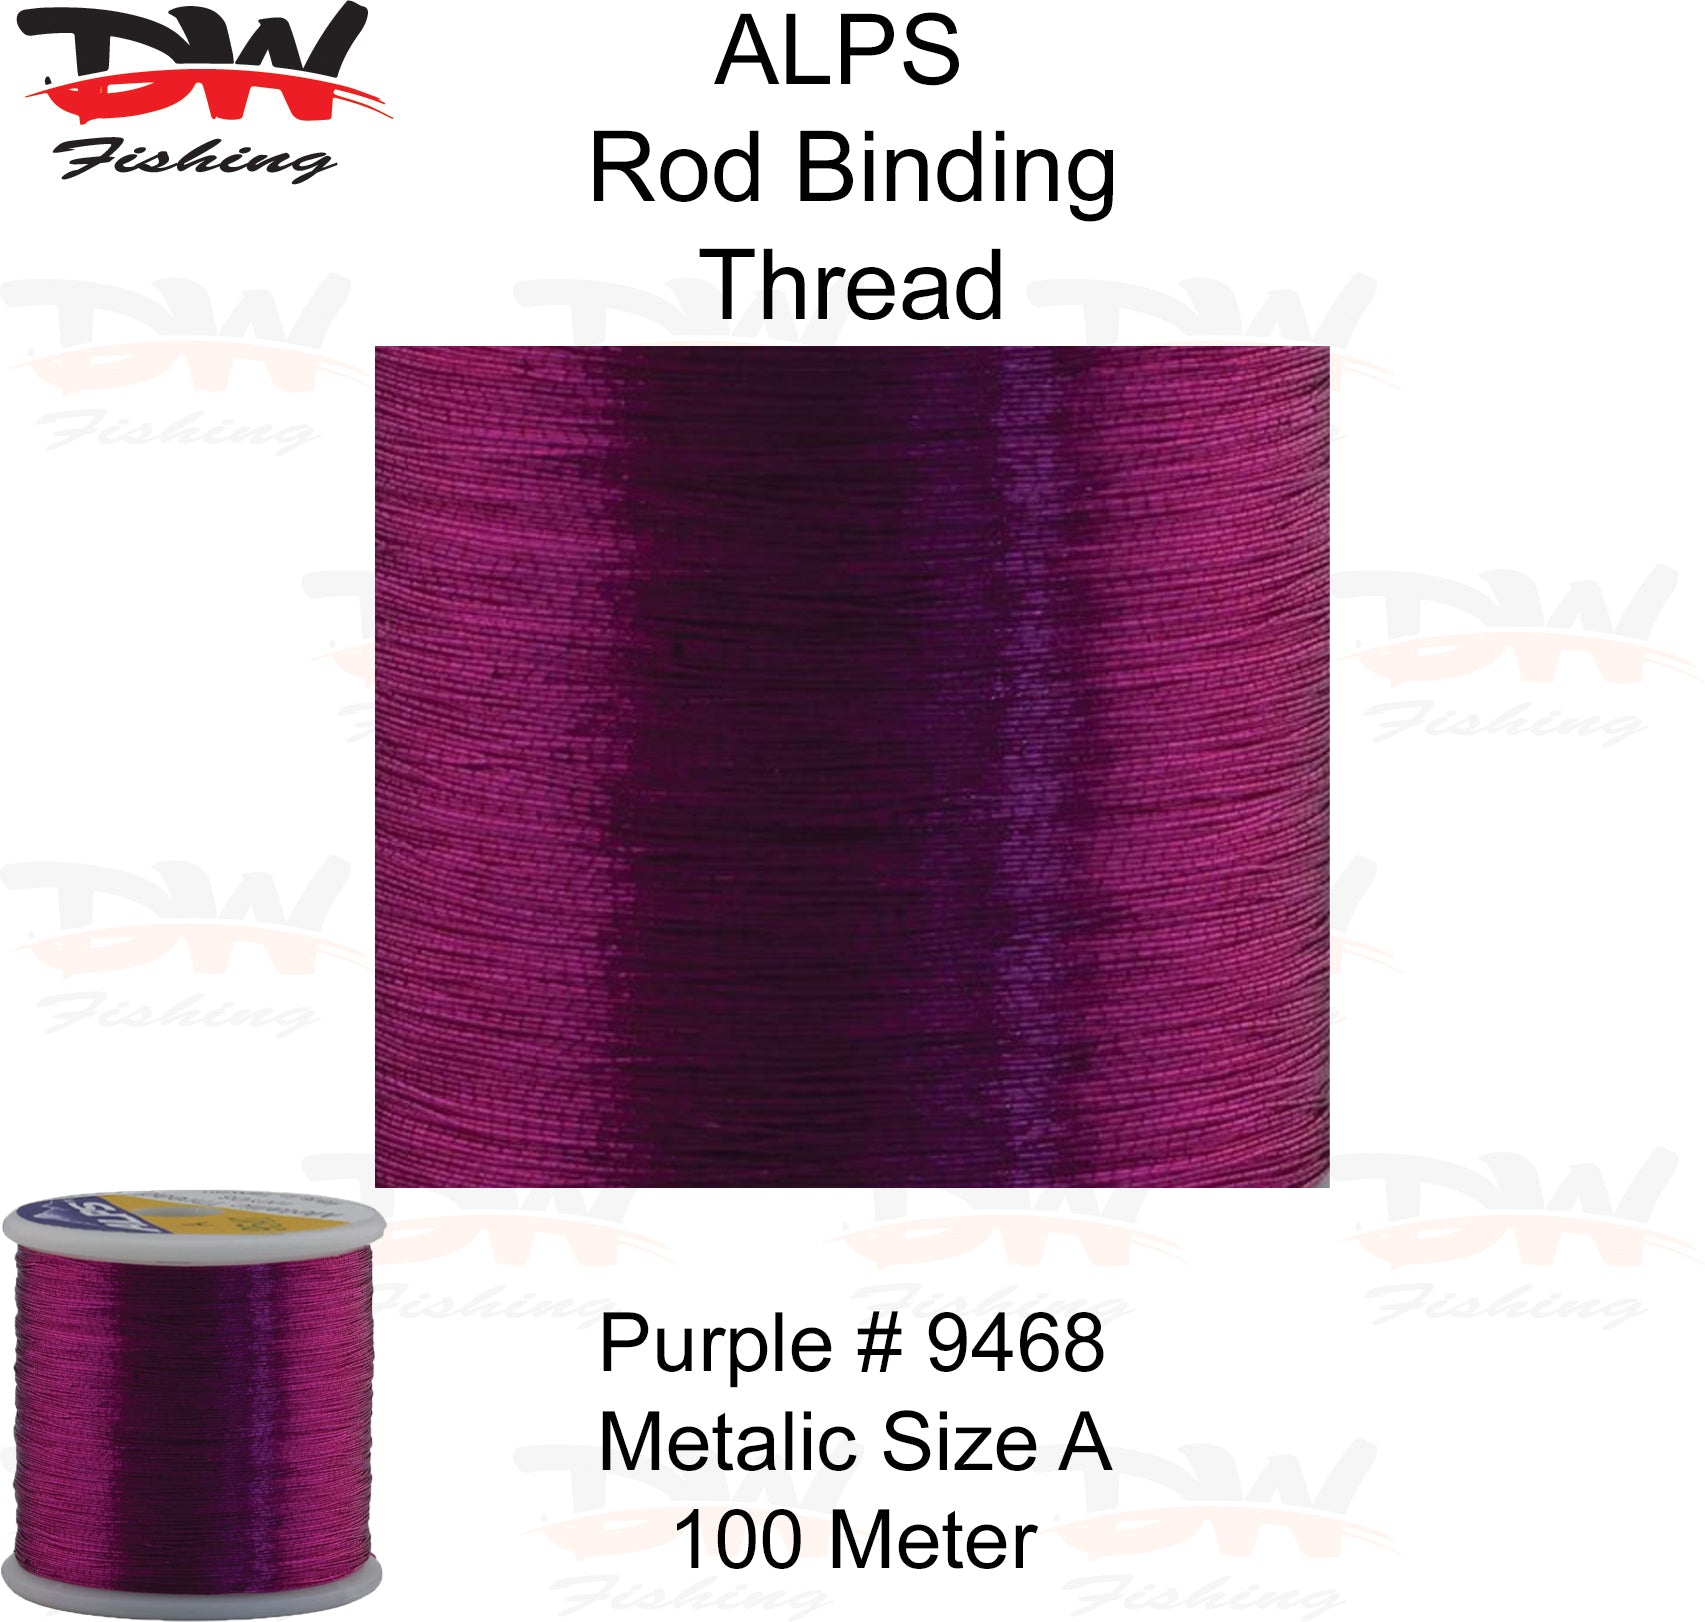 ALPS metalic rod binding thread Purple